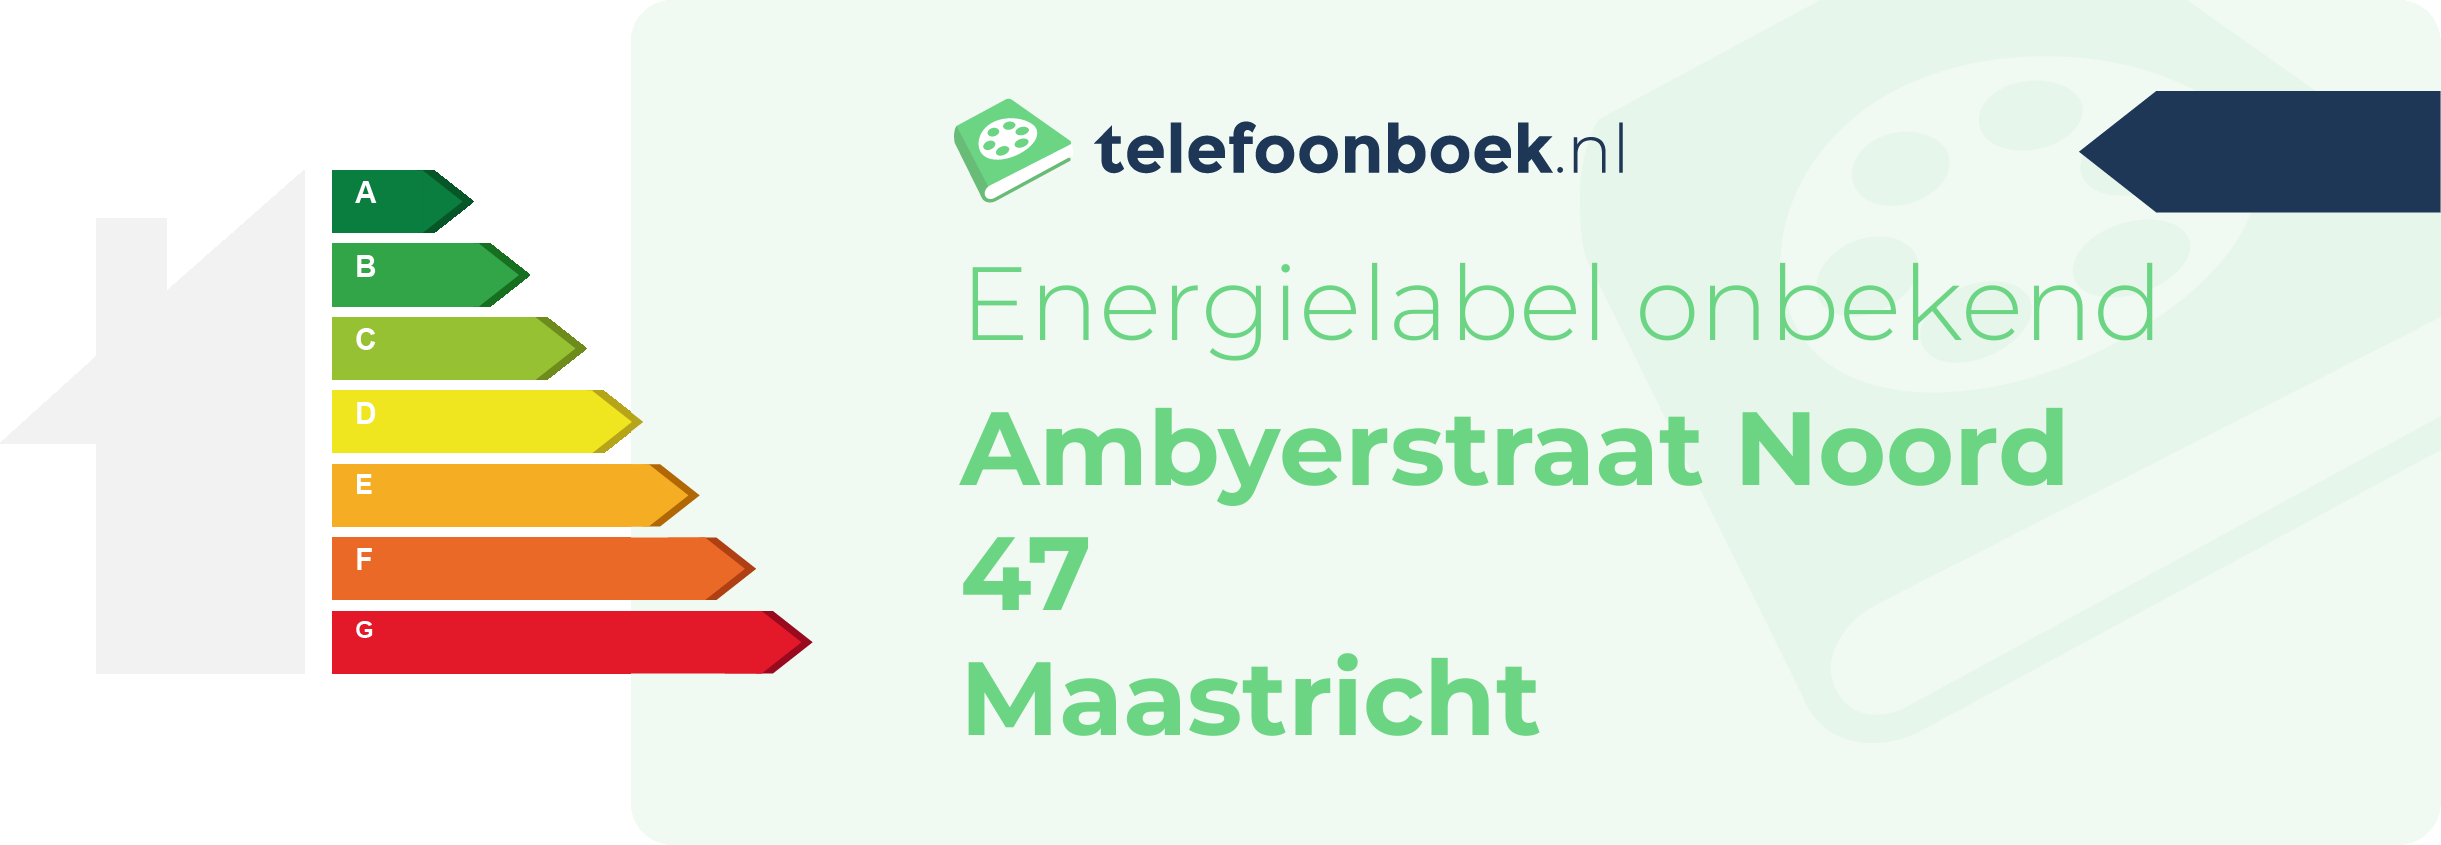 Energielabel Ambyerstraat Noord 47 Maastricht